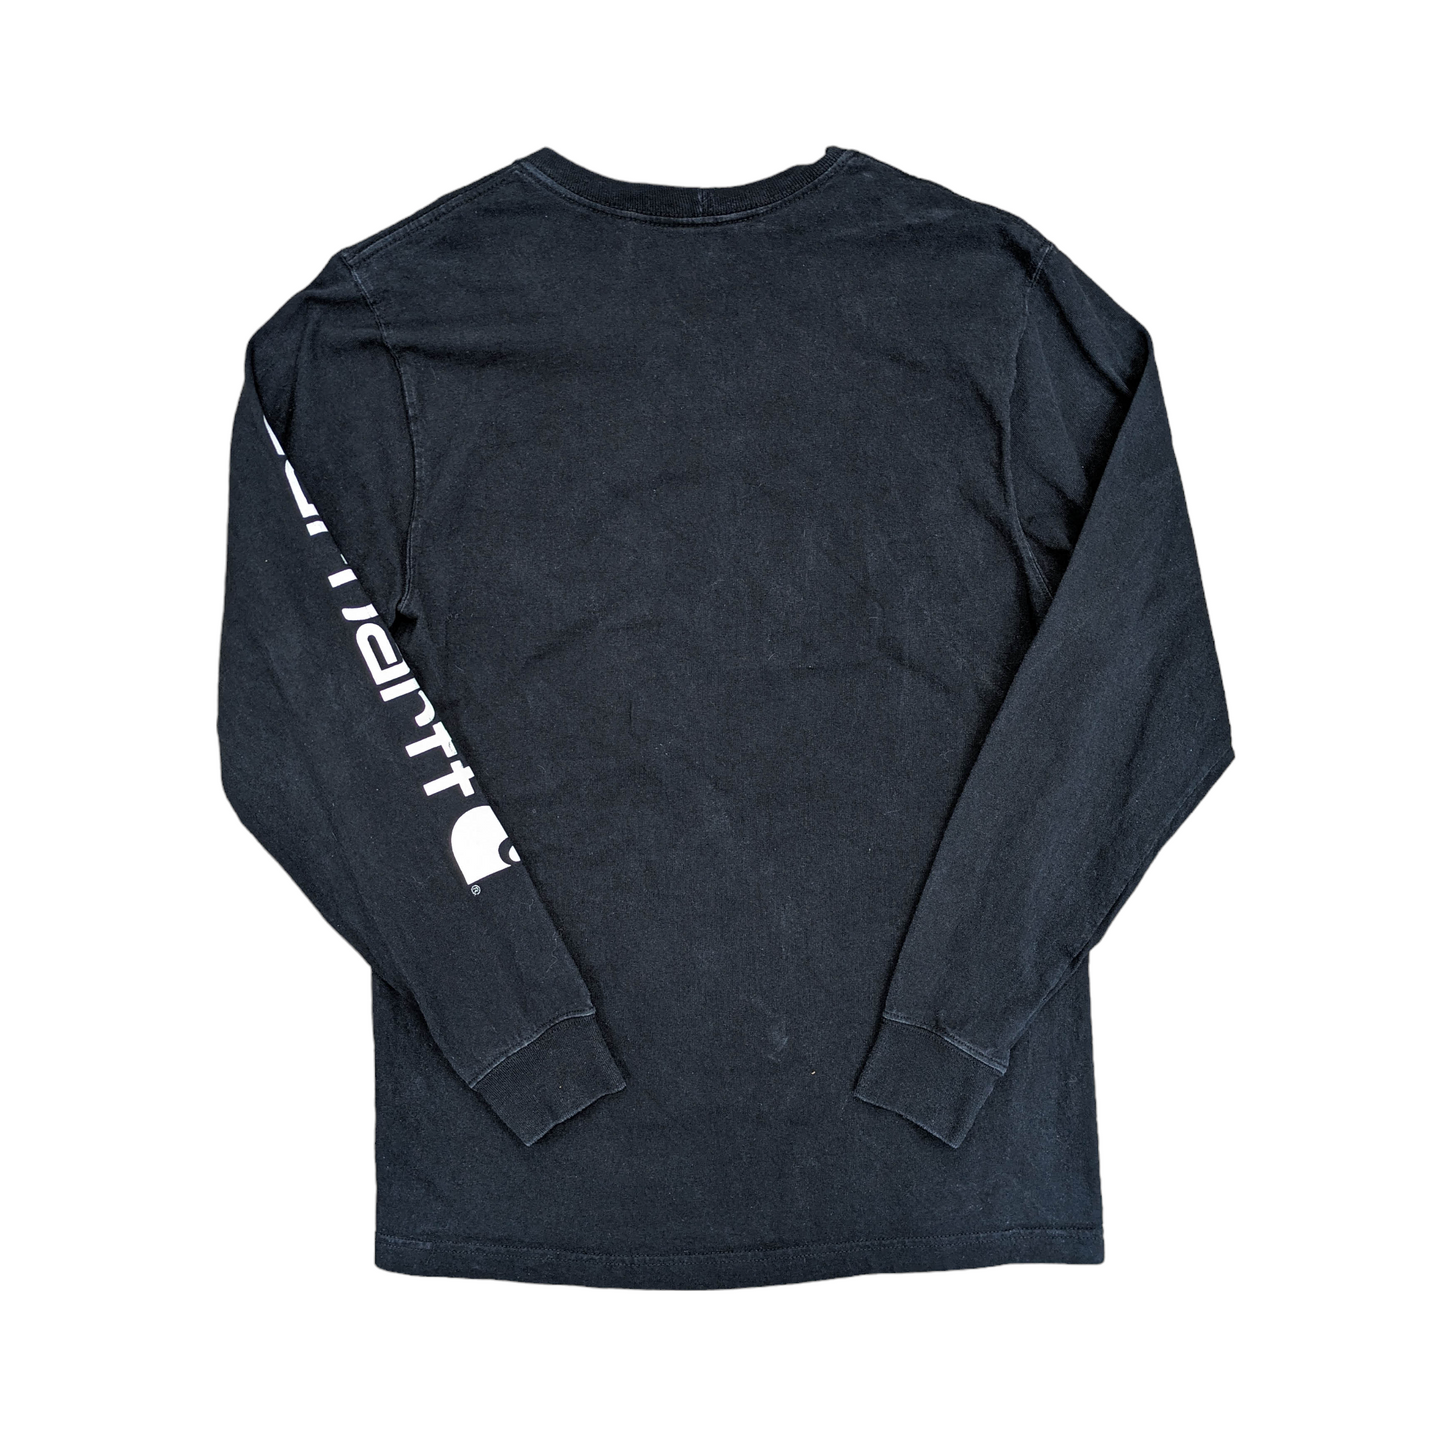 Carhartt L/S T-Shirt Size S